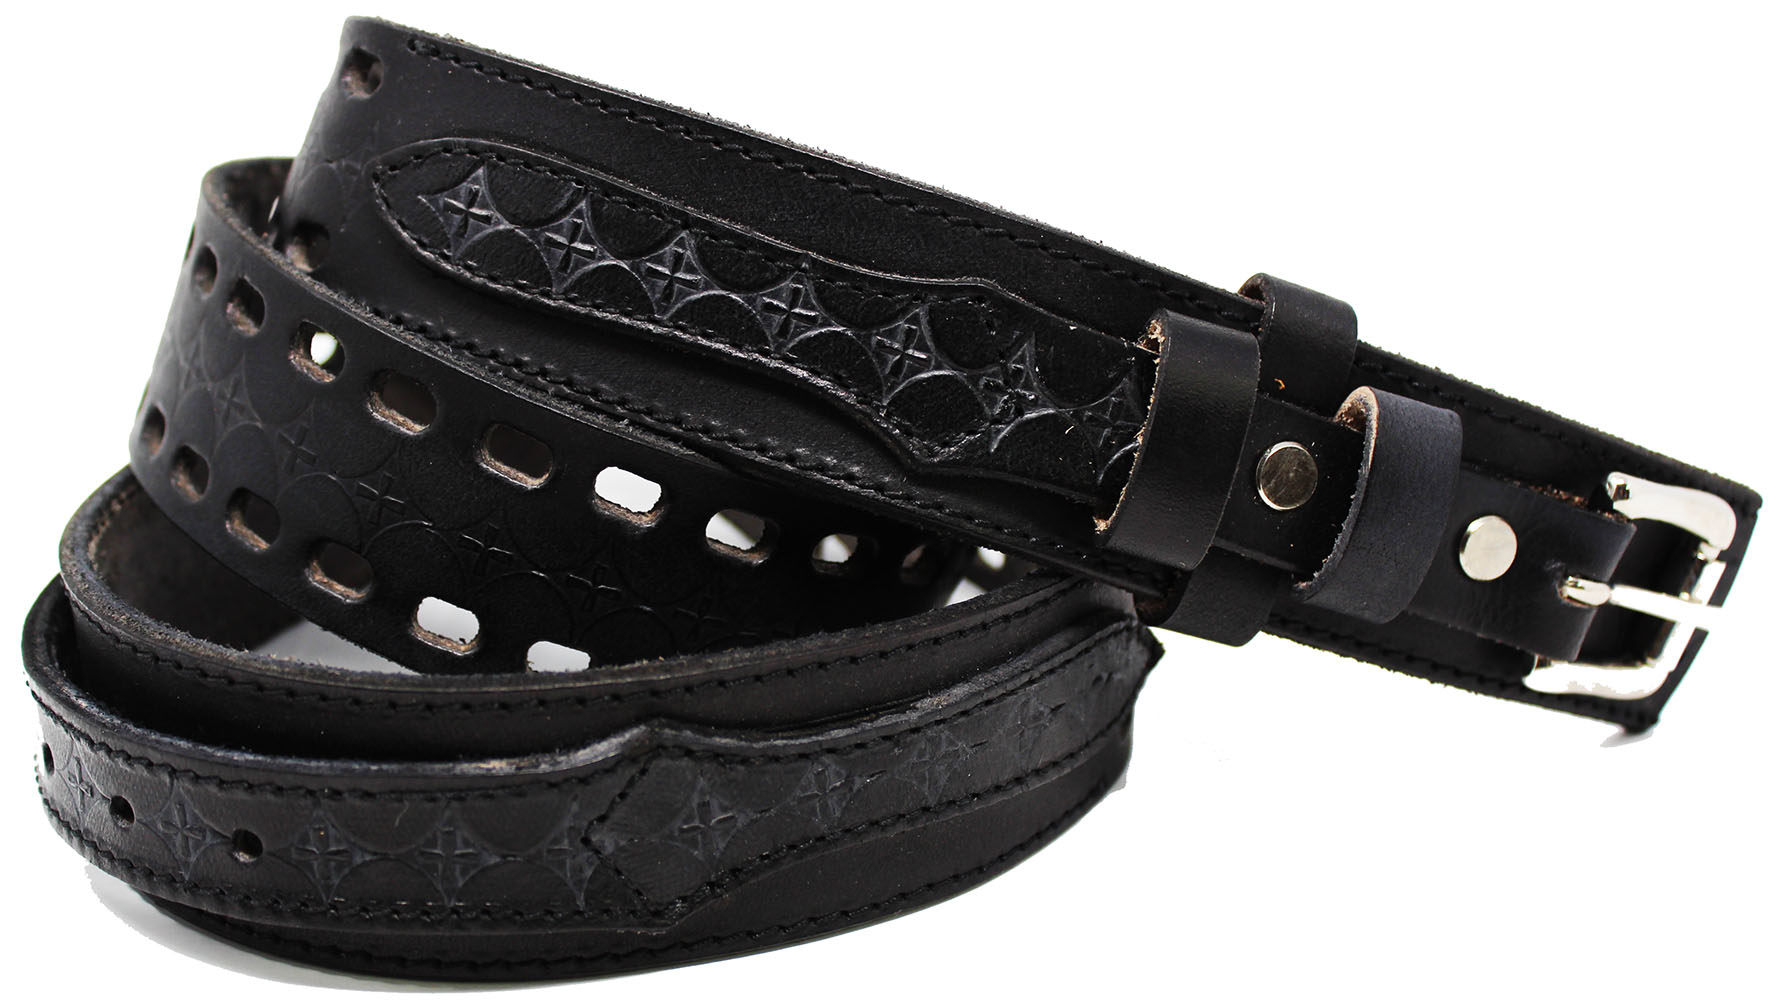 37-38  Men's 100% Leather Double Hole Casual Jean Ranger Belt Cross Black 12RAA23BK - image 2 of 5